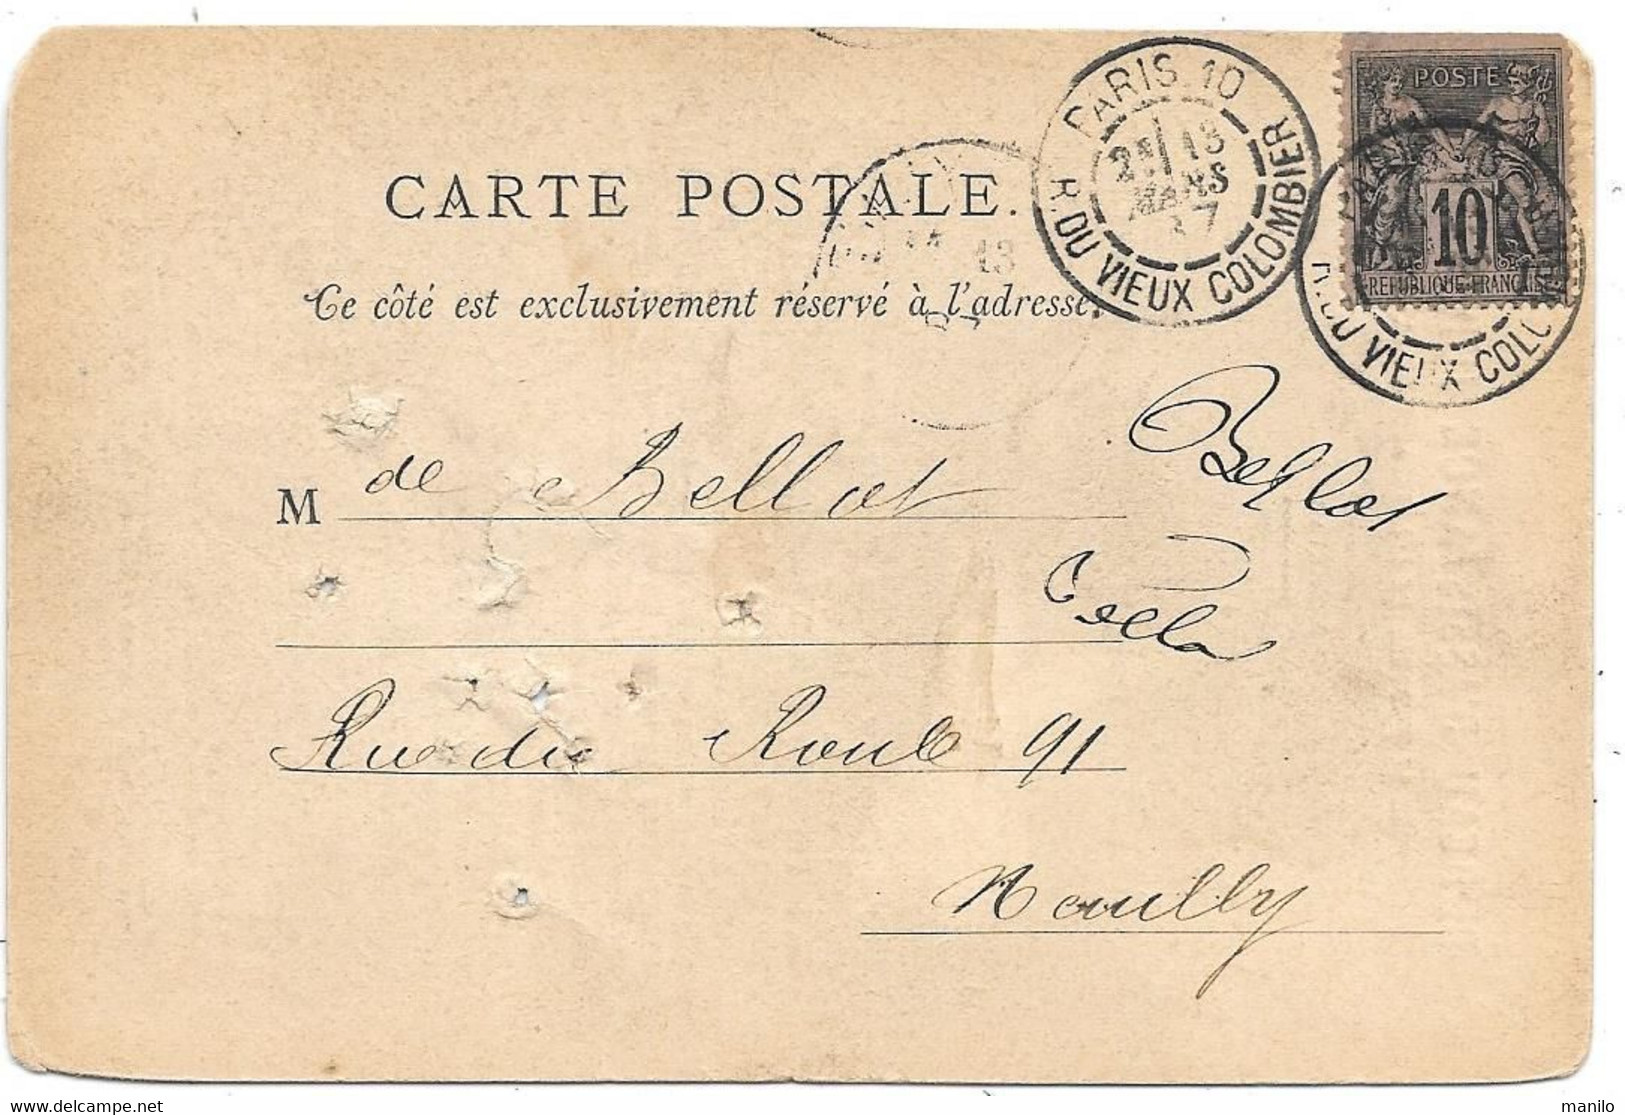 Carte Précurseur Repiquage BUREAU ASSISTANCE JUDICIAIRE 1887 (Refus) Timbre Type SAGE  Paris - Neuilly S/seine -65542 - Precursor Cards